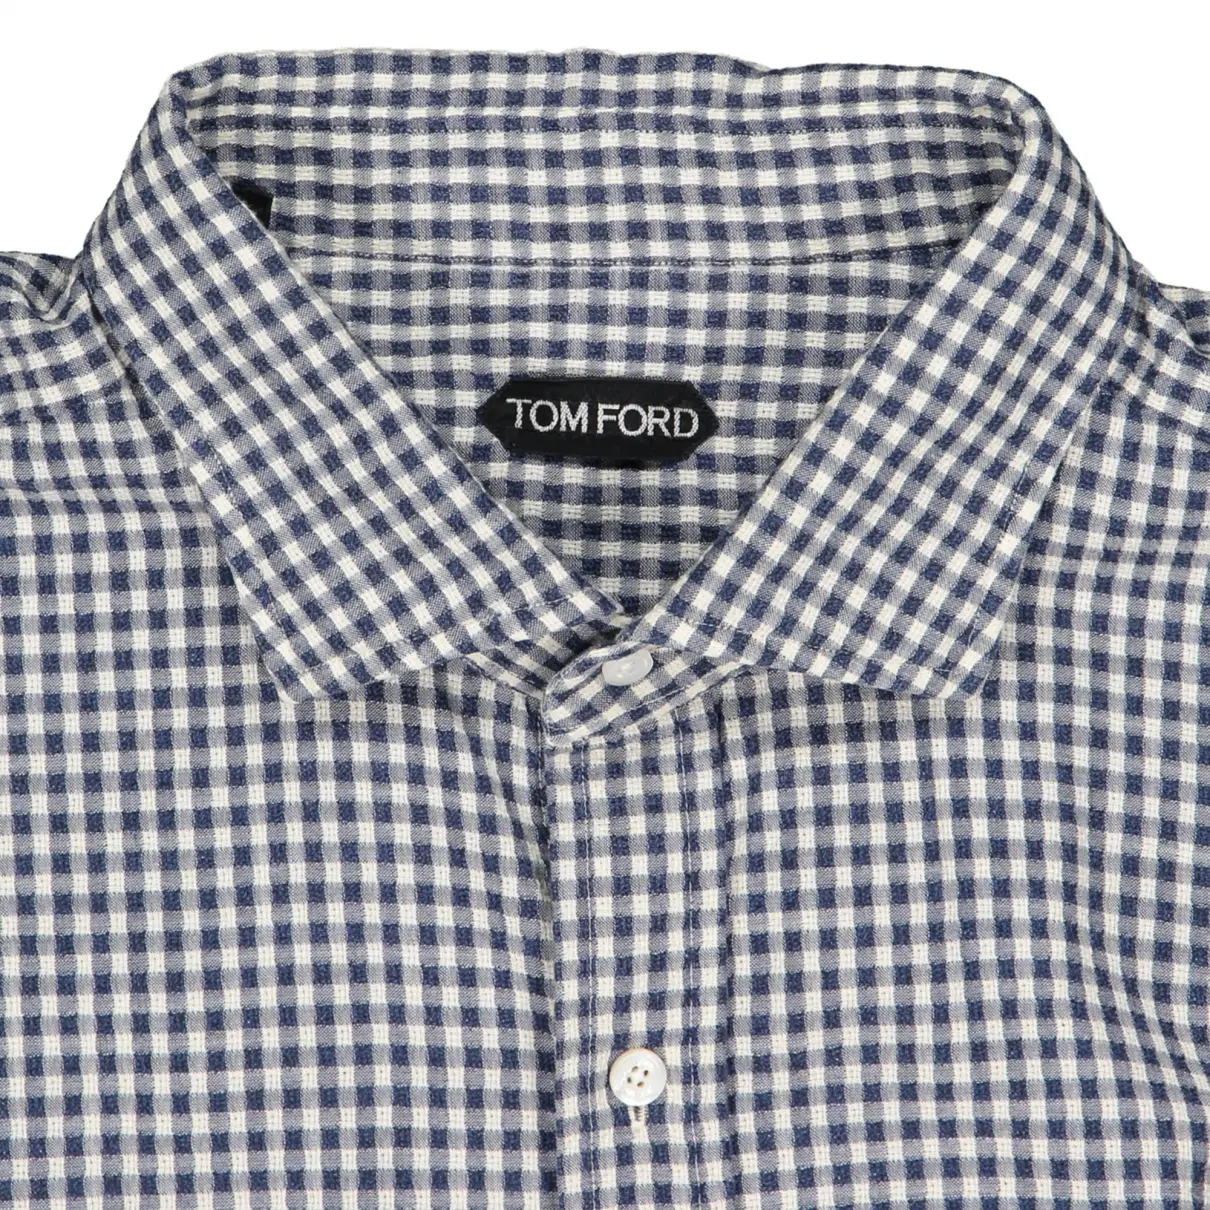 Buy Tom Ford Shirt online